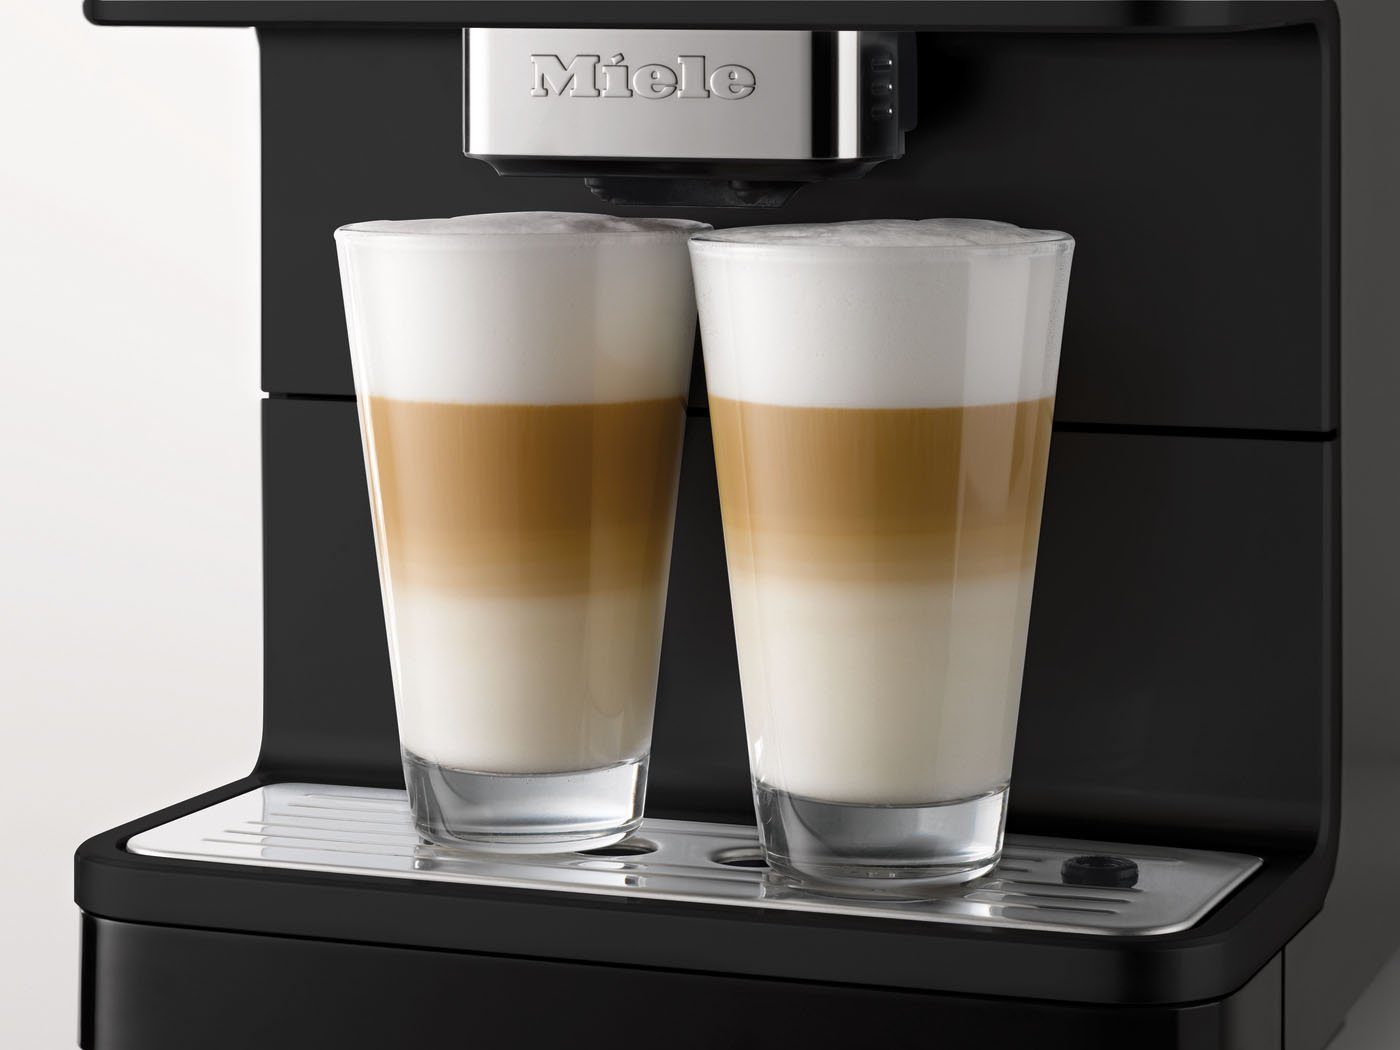 MilkPerfection, Kaffeekannenfunktion Miele Kaffeevollautomat Genießerprofile, CM 6160